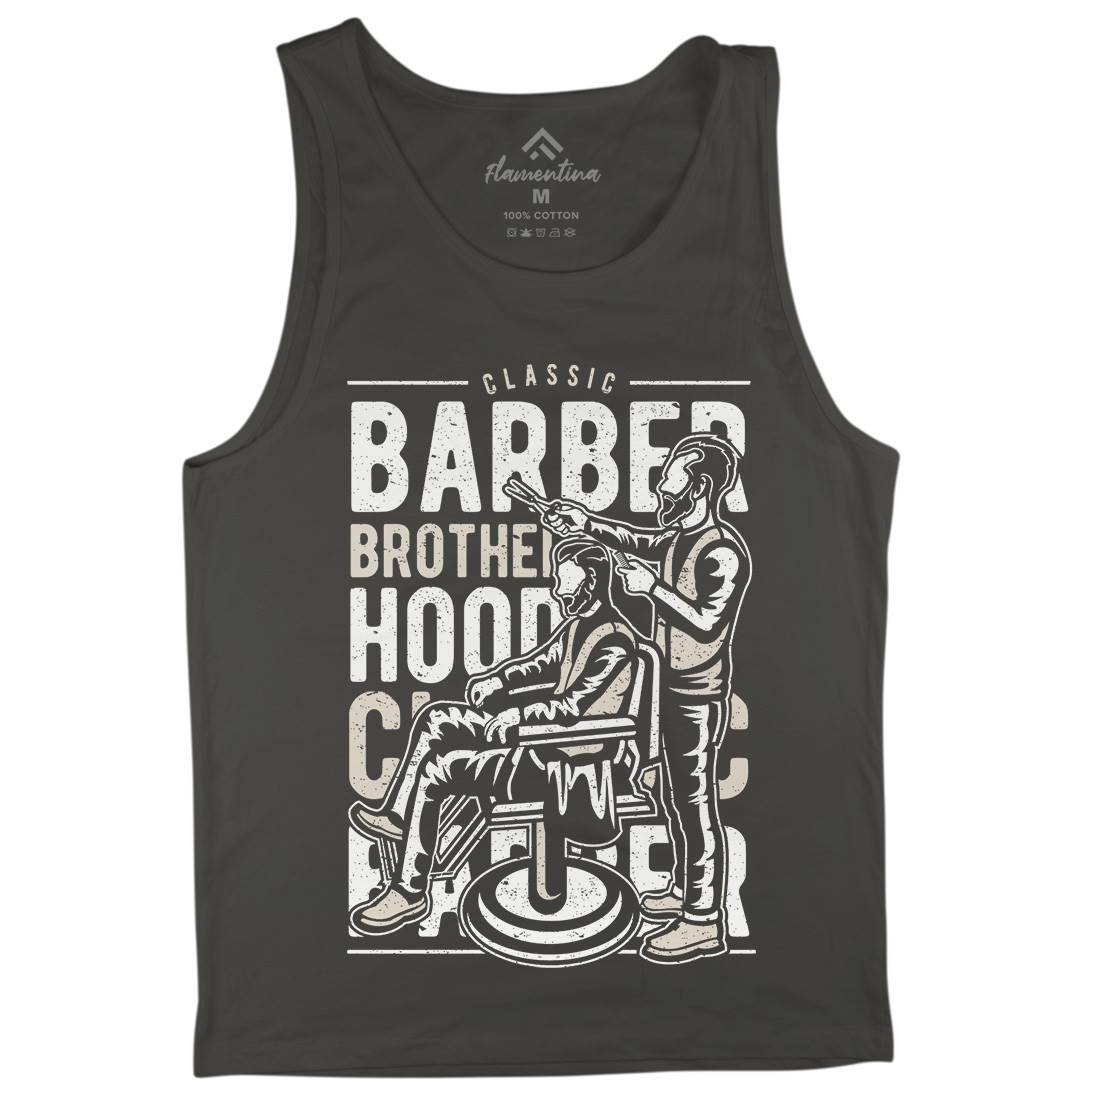 Brotherhood Mens Tank Top Vest Barber A009